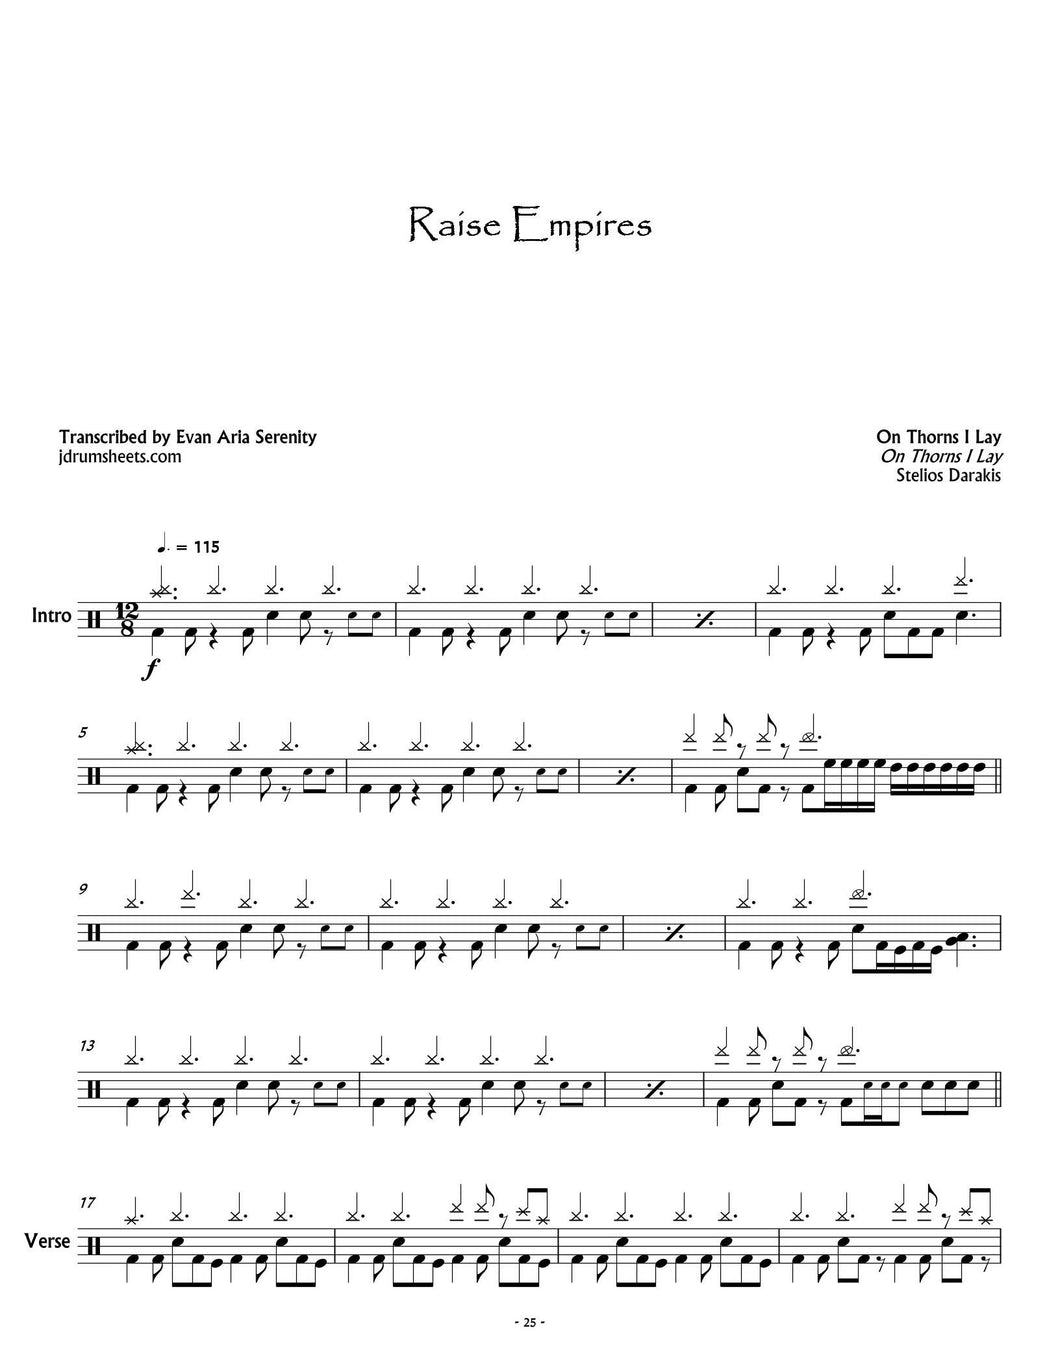 Raise Empires - On Thorns I Lay - Full Drum Transcription / Drum Sheet Music - Jaslow Drum Sheets